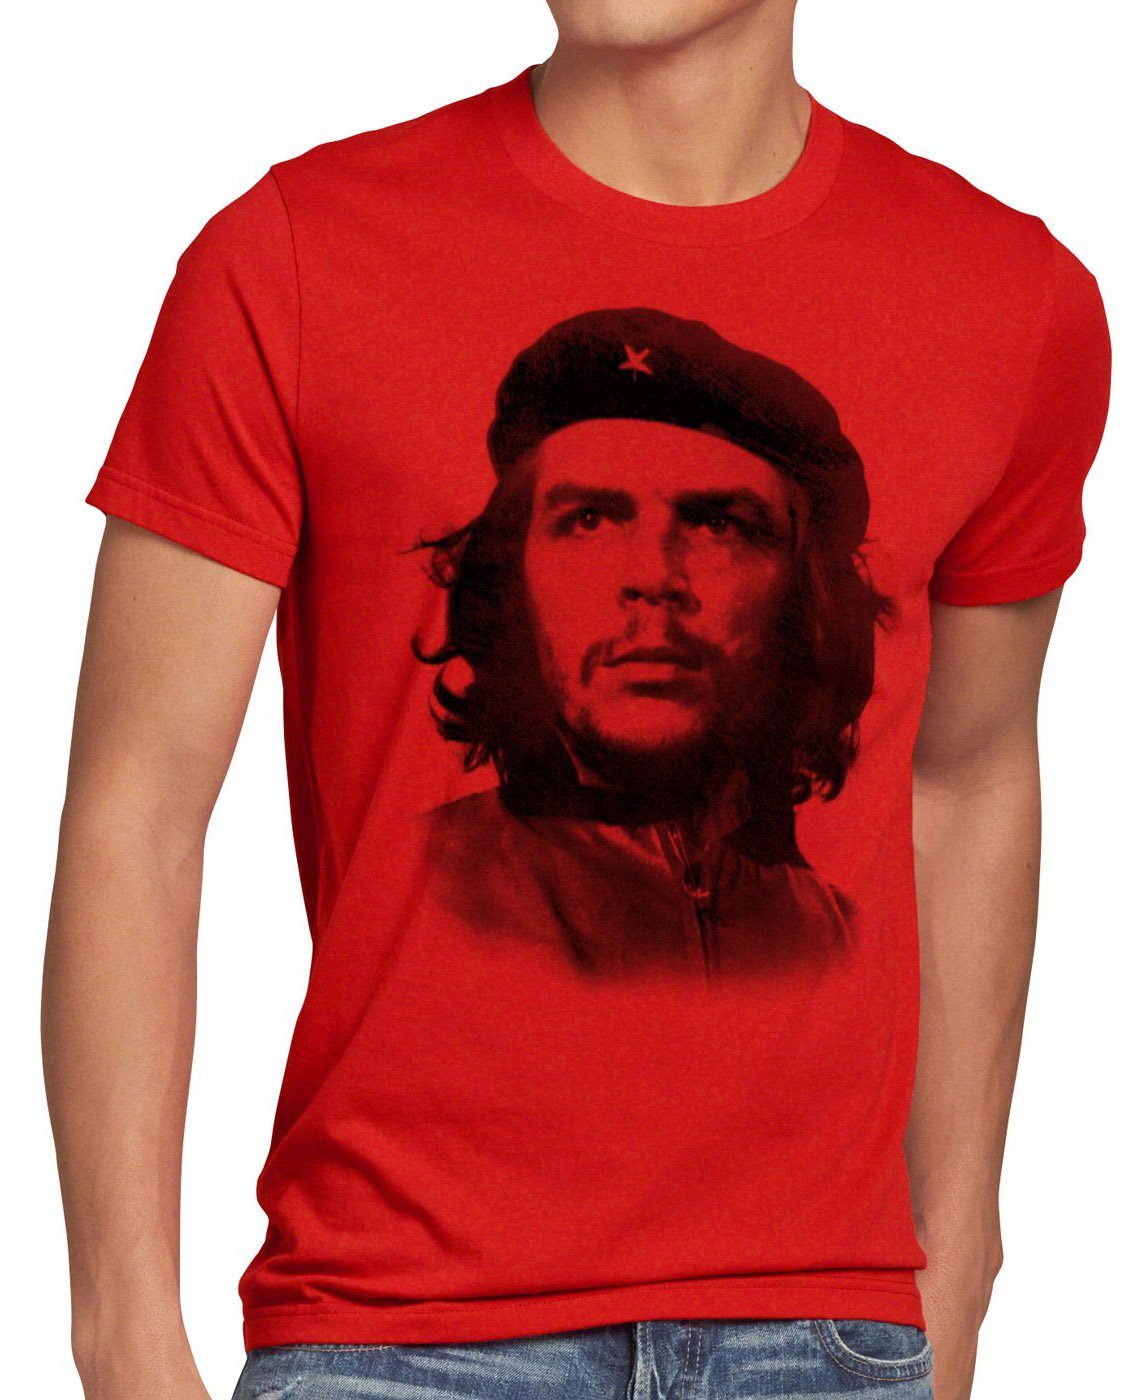 style3 Print-Shirt Havana revolution Foto CHE Kommunismus Herren T-Shirt cuba Guevara rot kuba castro